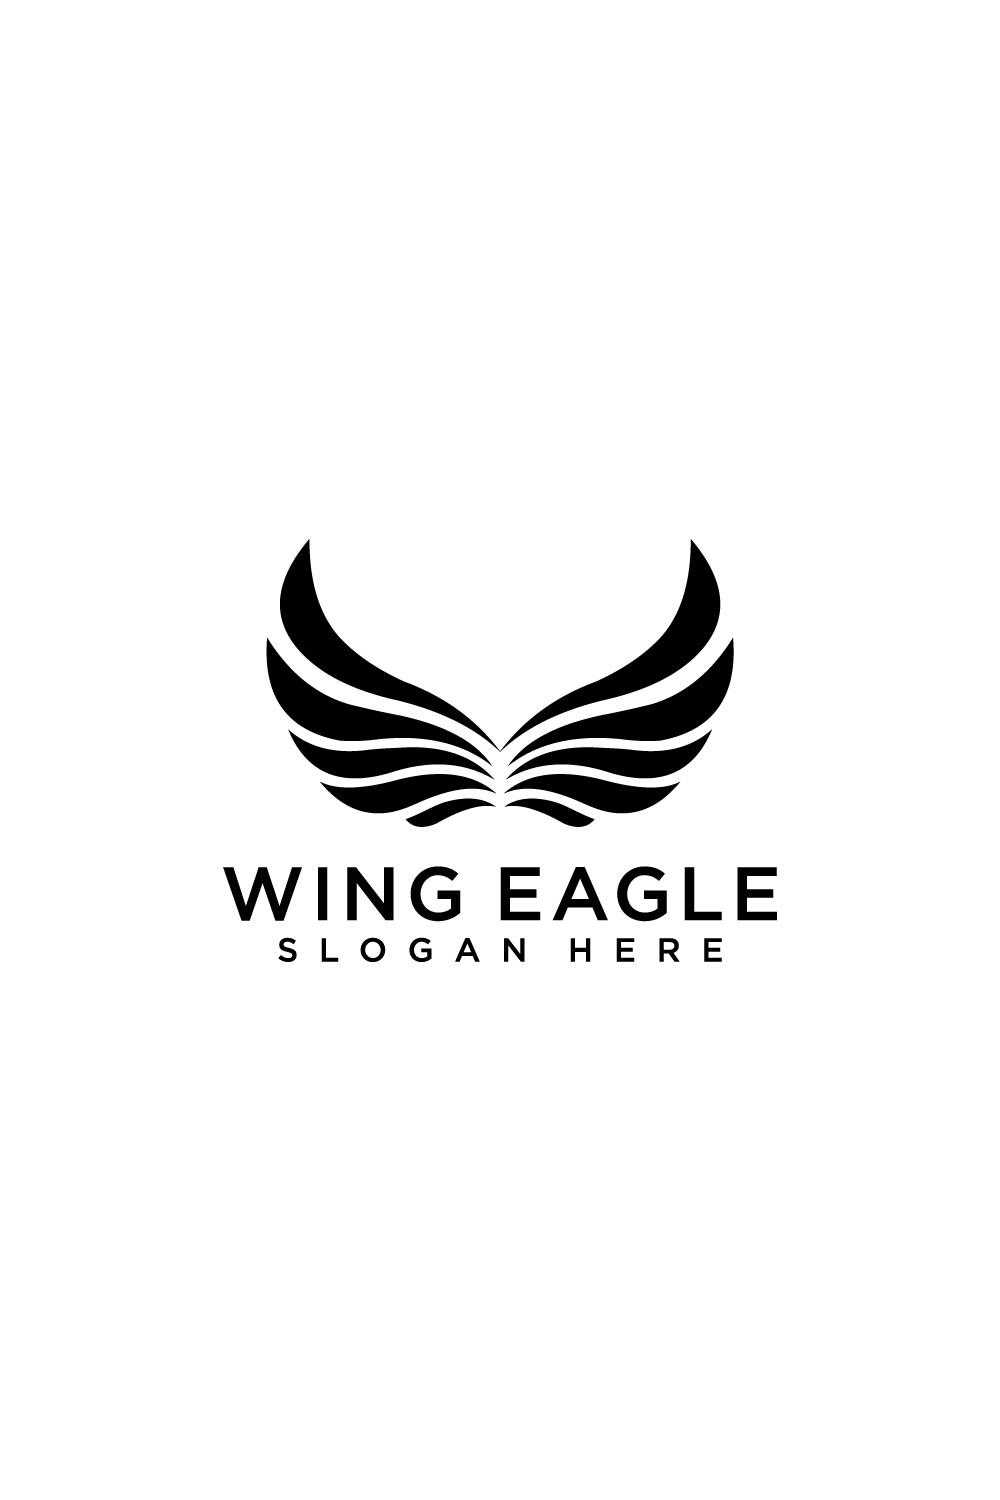 wings eagle logo design pinterest preview image.